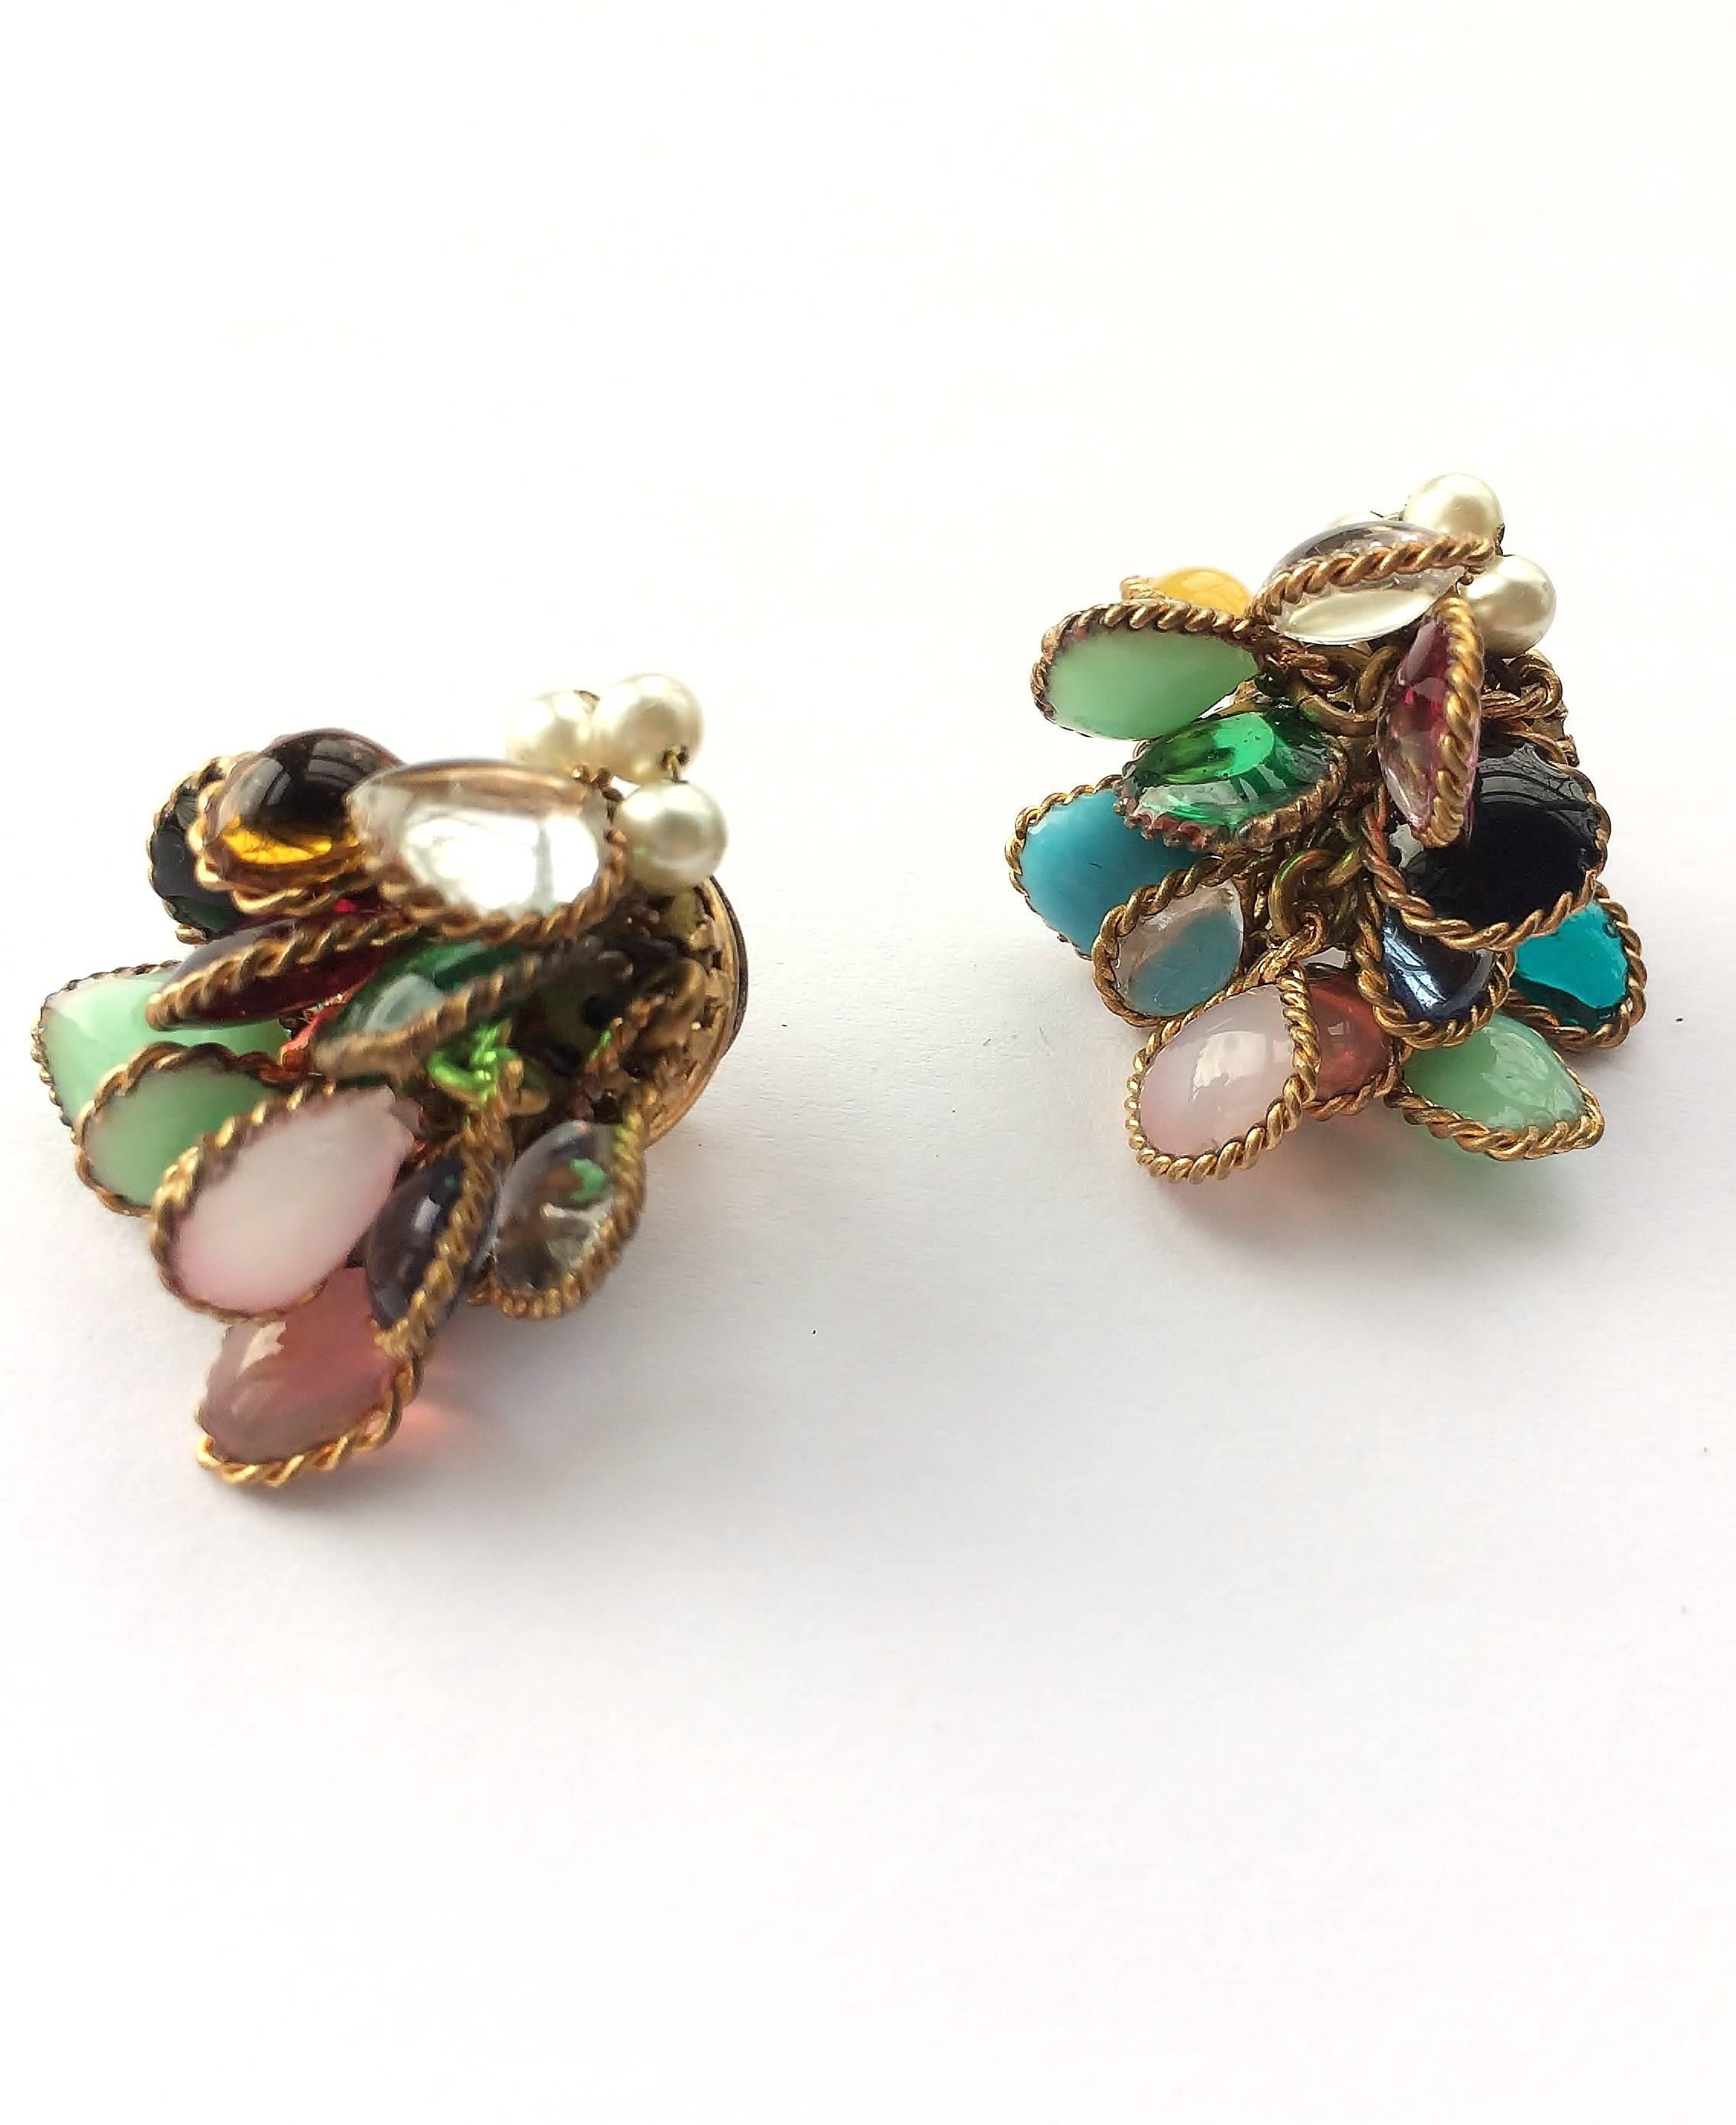 Women's Multi coloured poured glass cluster earrings, Maison Gripoix, att. Chanel 1960s.